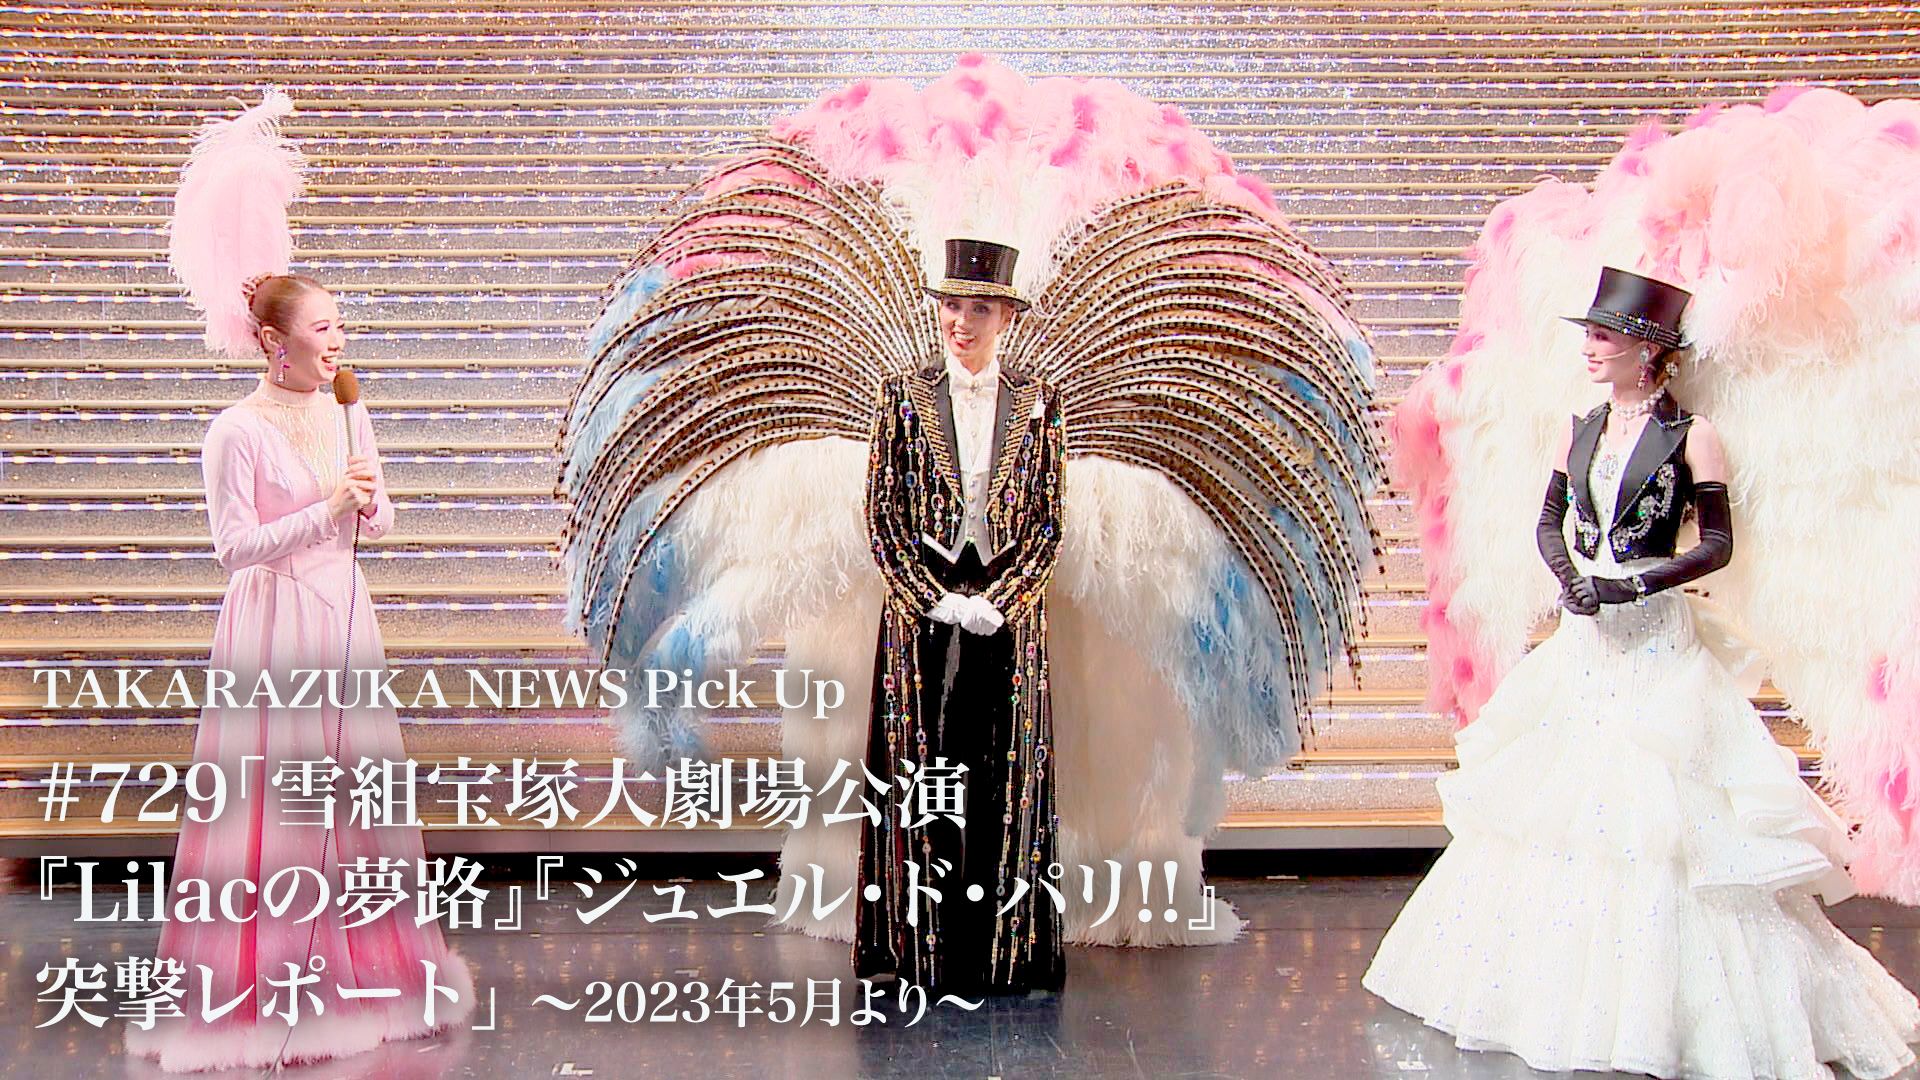 TAKARAZUKA NEWS Pick Up #729「雪組宝塚大劇場公演『Lilacの夢路』『ジュエル・ド・パリ!!』突撃レポート」〜2023年5月より〜